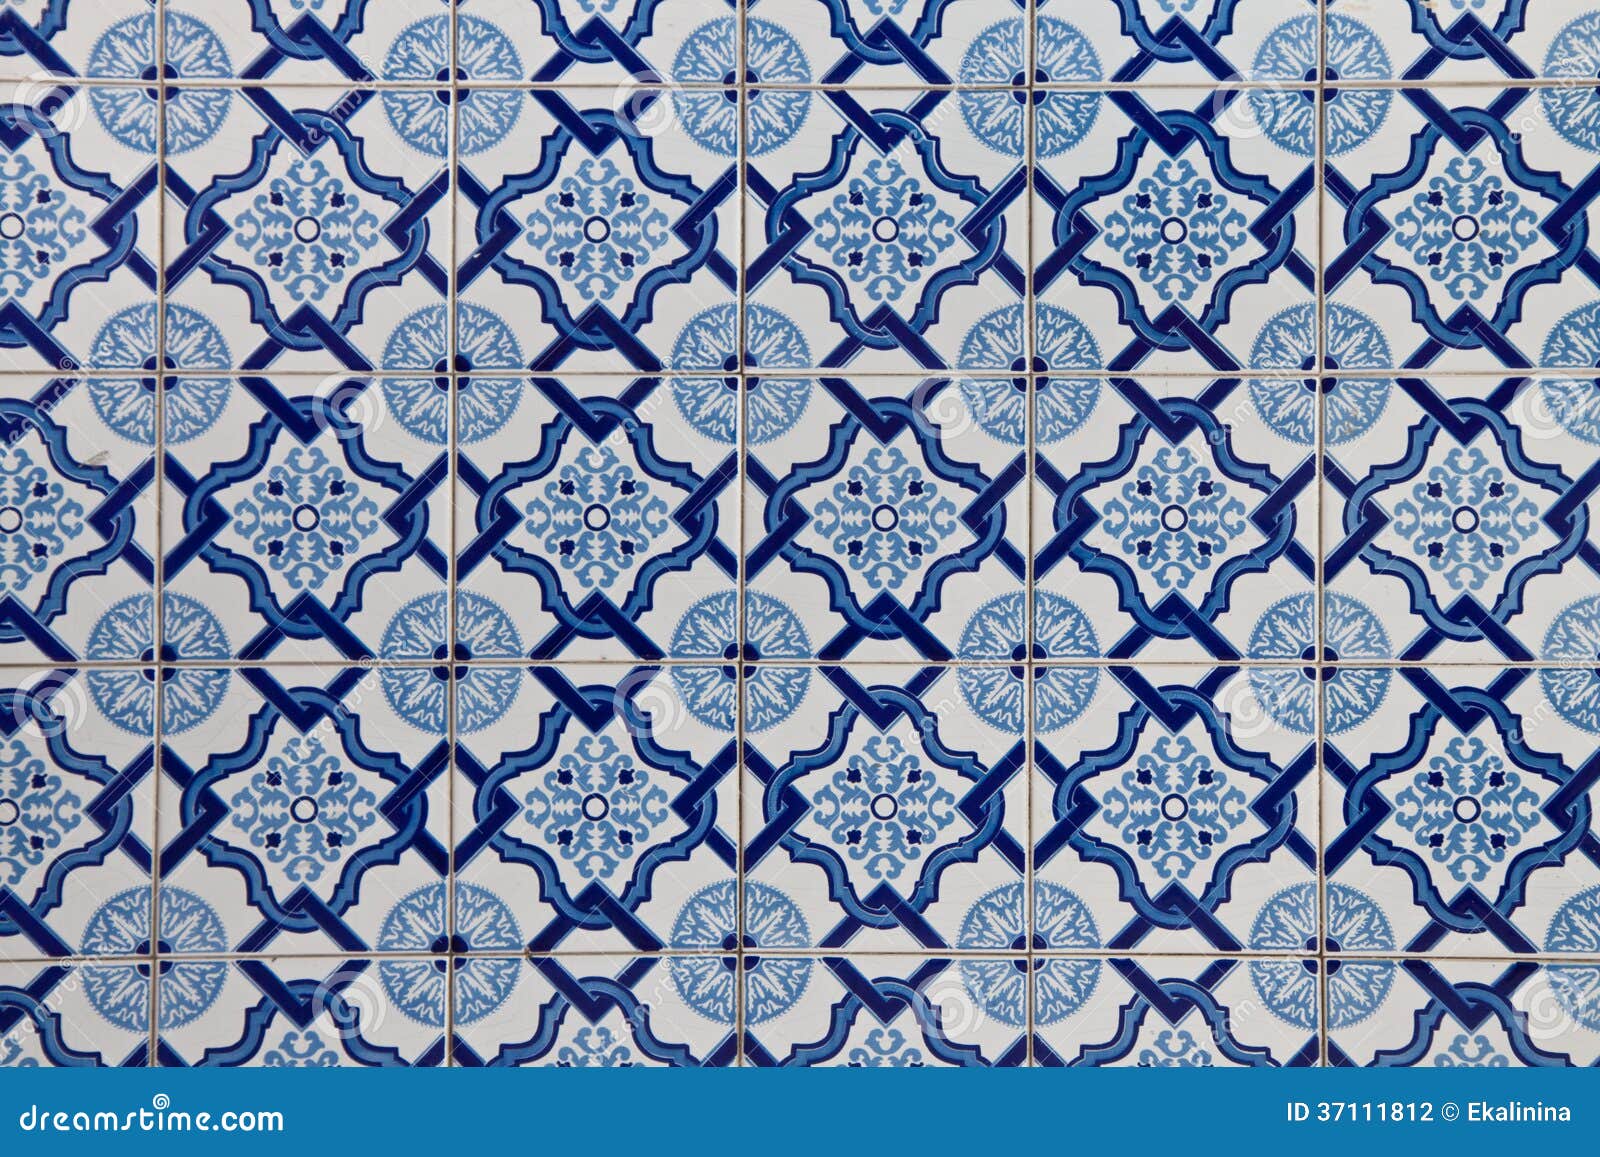 portuguese tiles azulejo